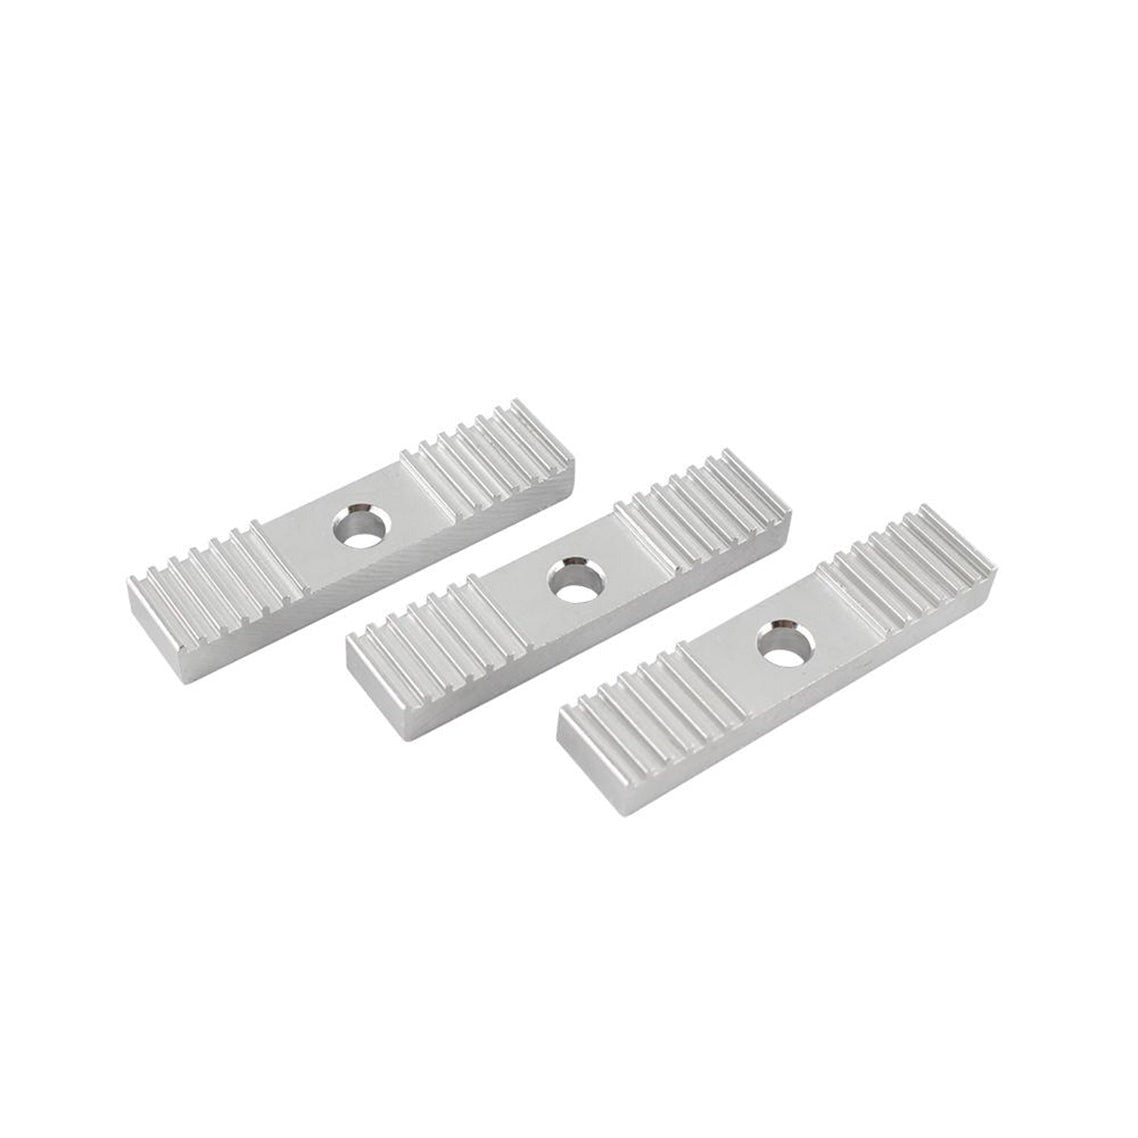 Zahnriemenhalter 2 Stück GT2 Alu Befestigung für Zahnriemen 3D Drucker / CNC Fräse